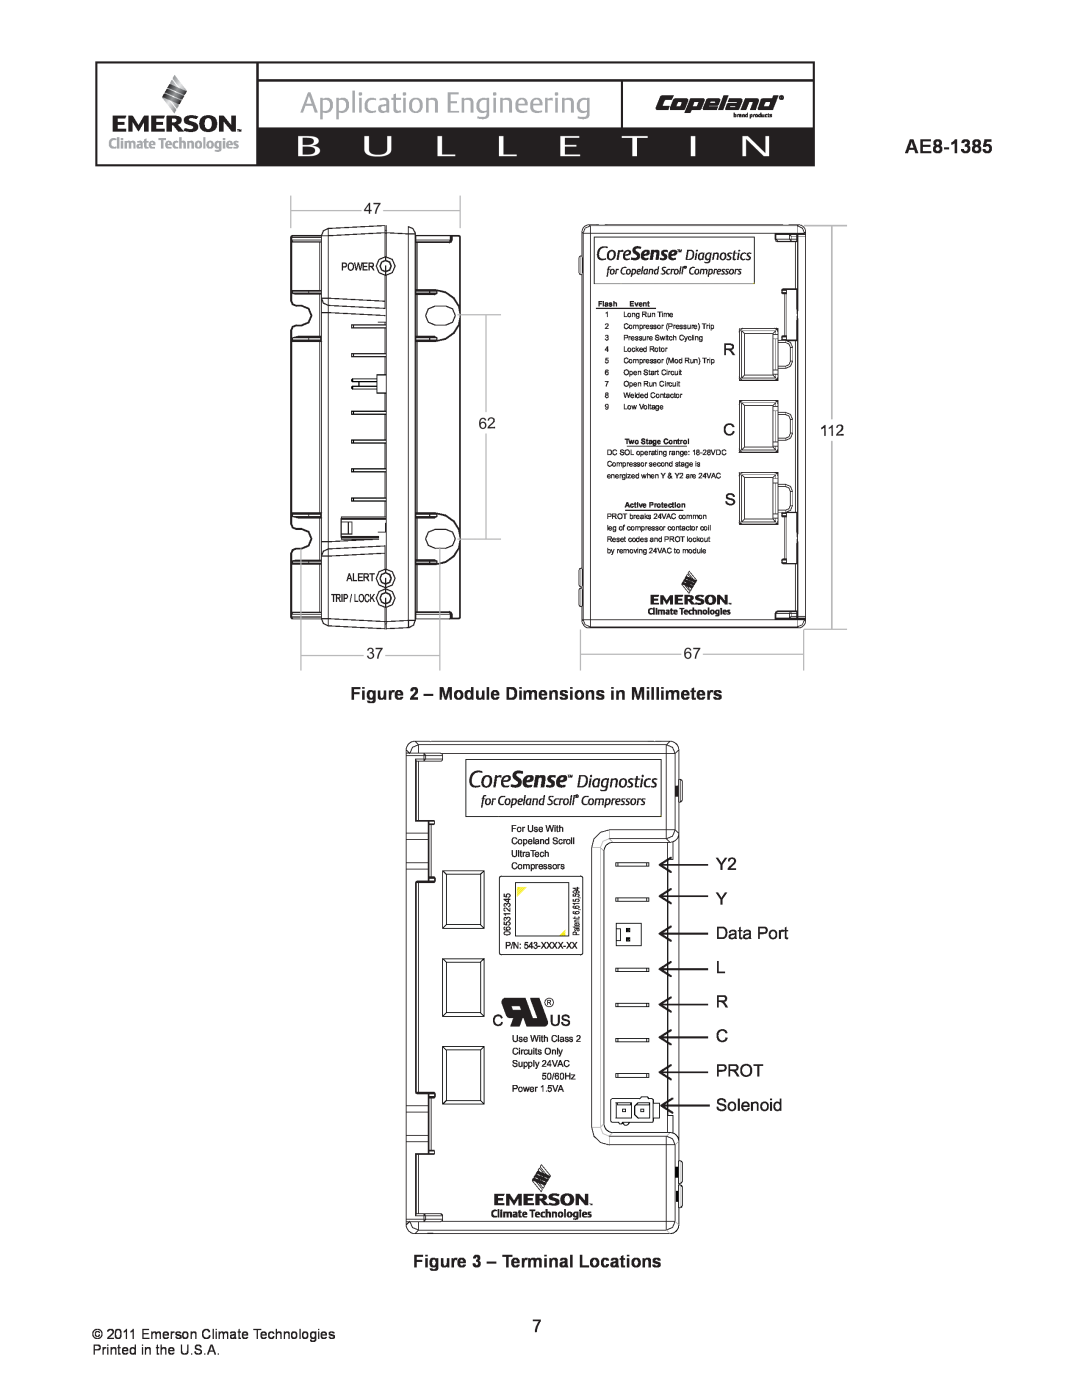 Emerson AE8-1385 Module Dimensions in Millimeters, Terminal Locations, Application Engineering, B U L L E, Power 